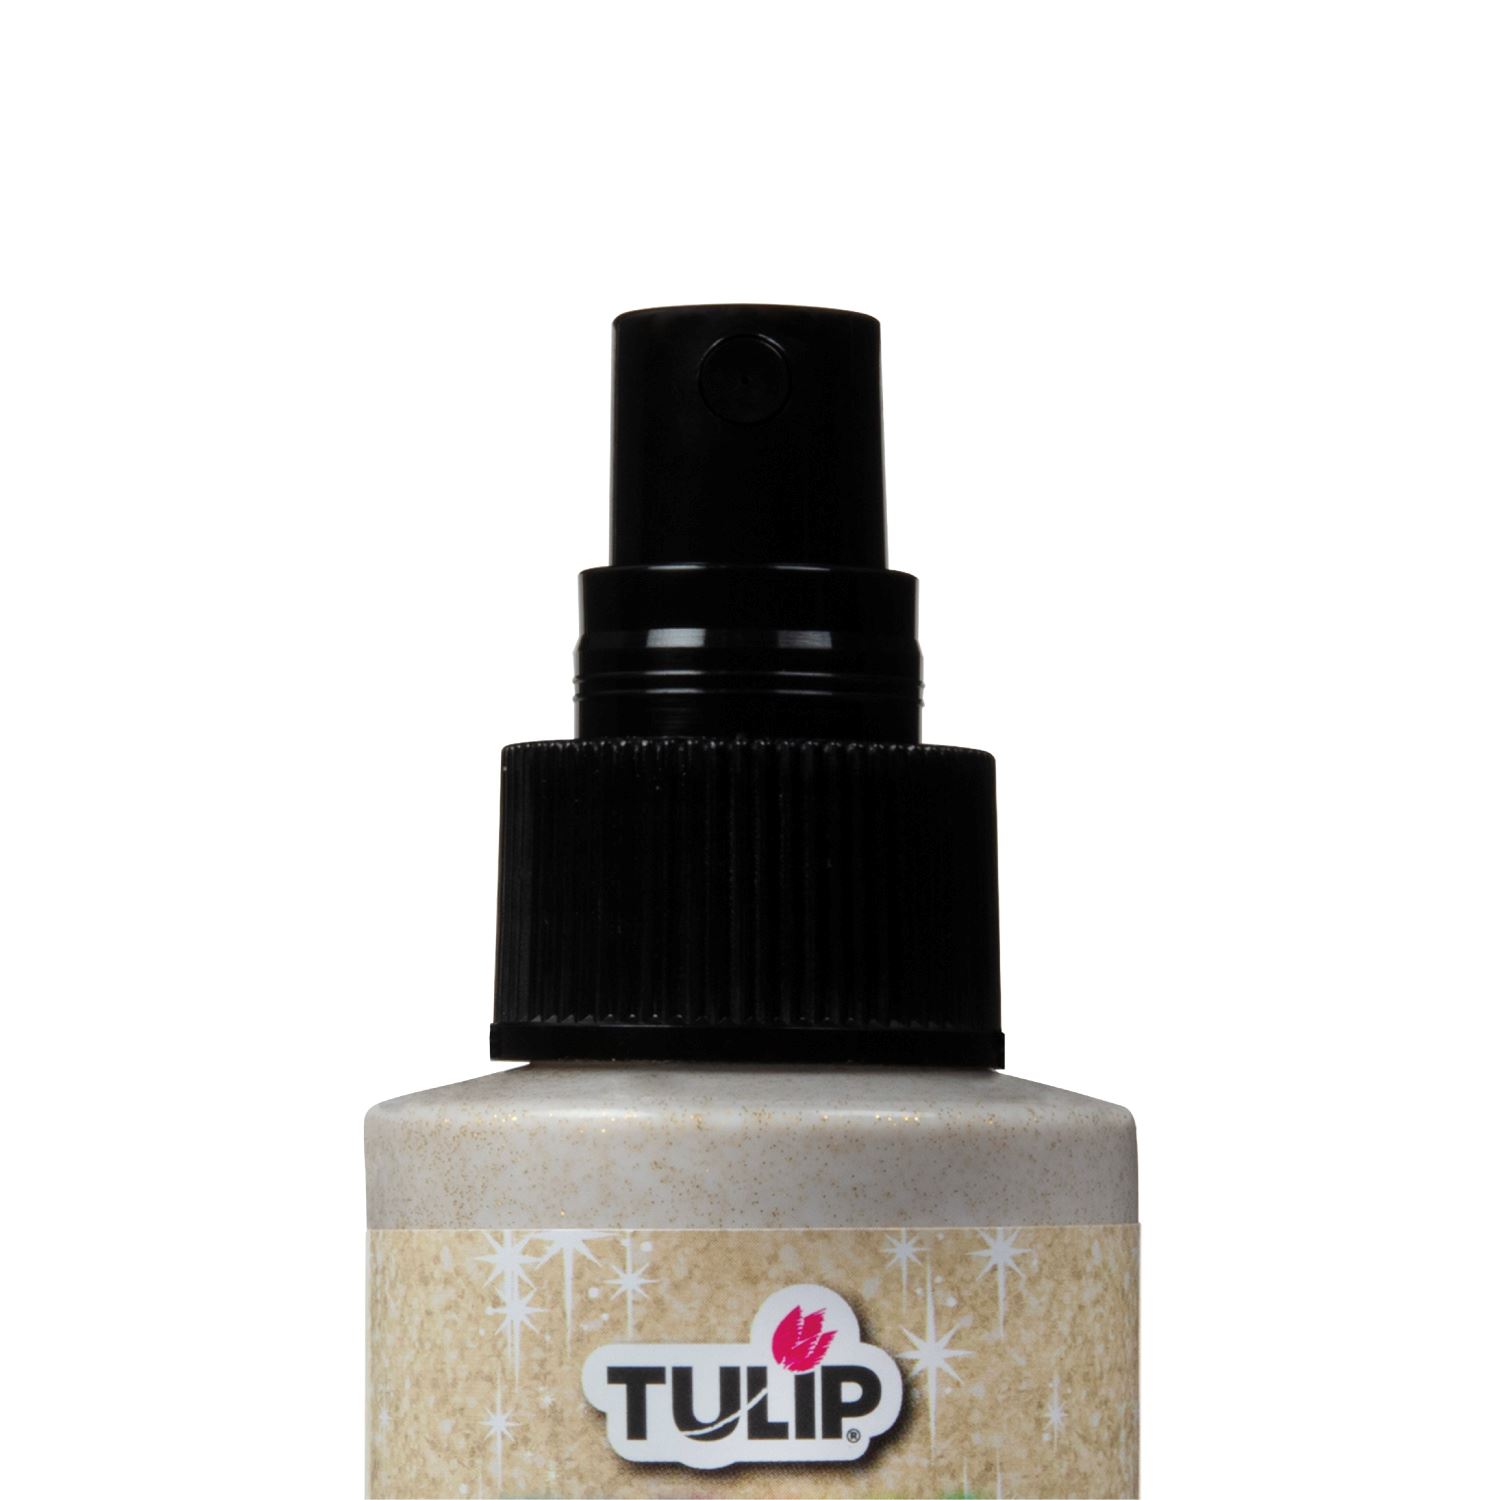 Tulip Fabric Spray Paint 4oz Glistening Gold Glitter